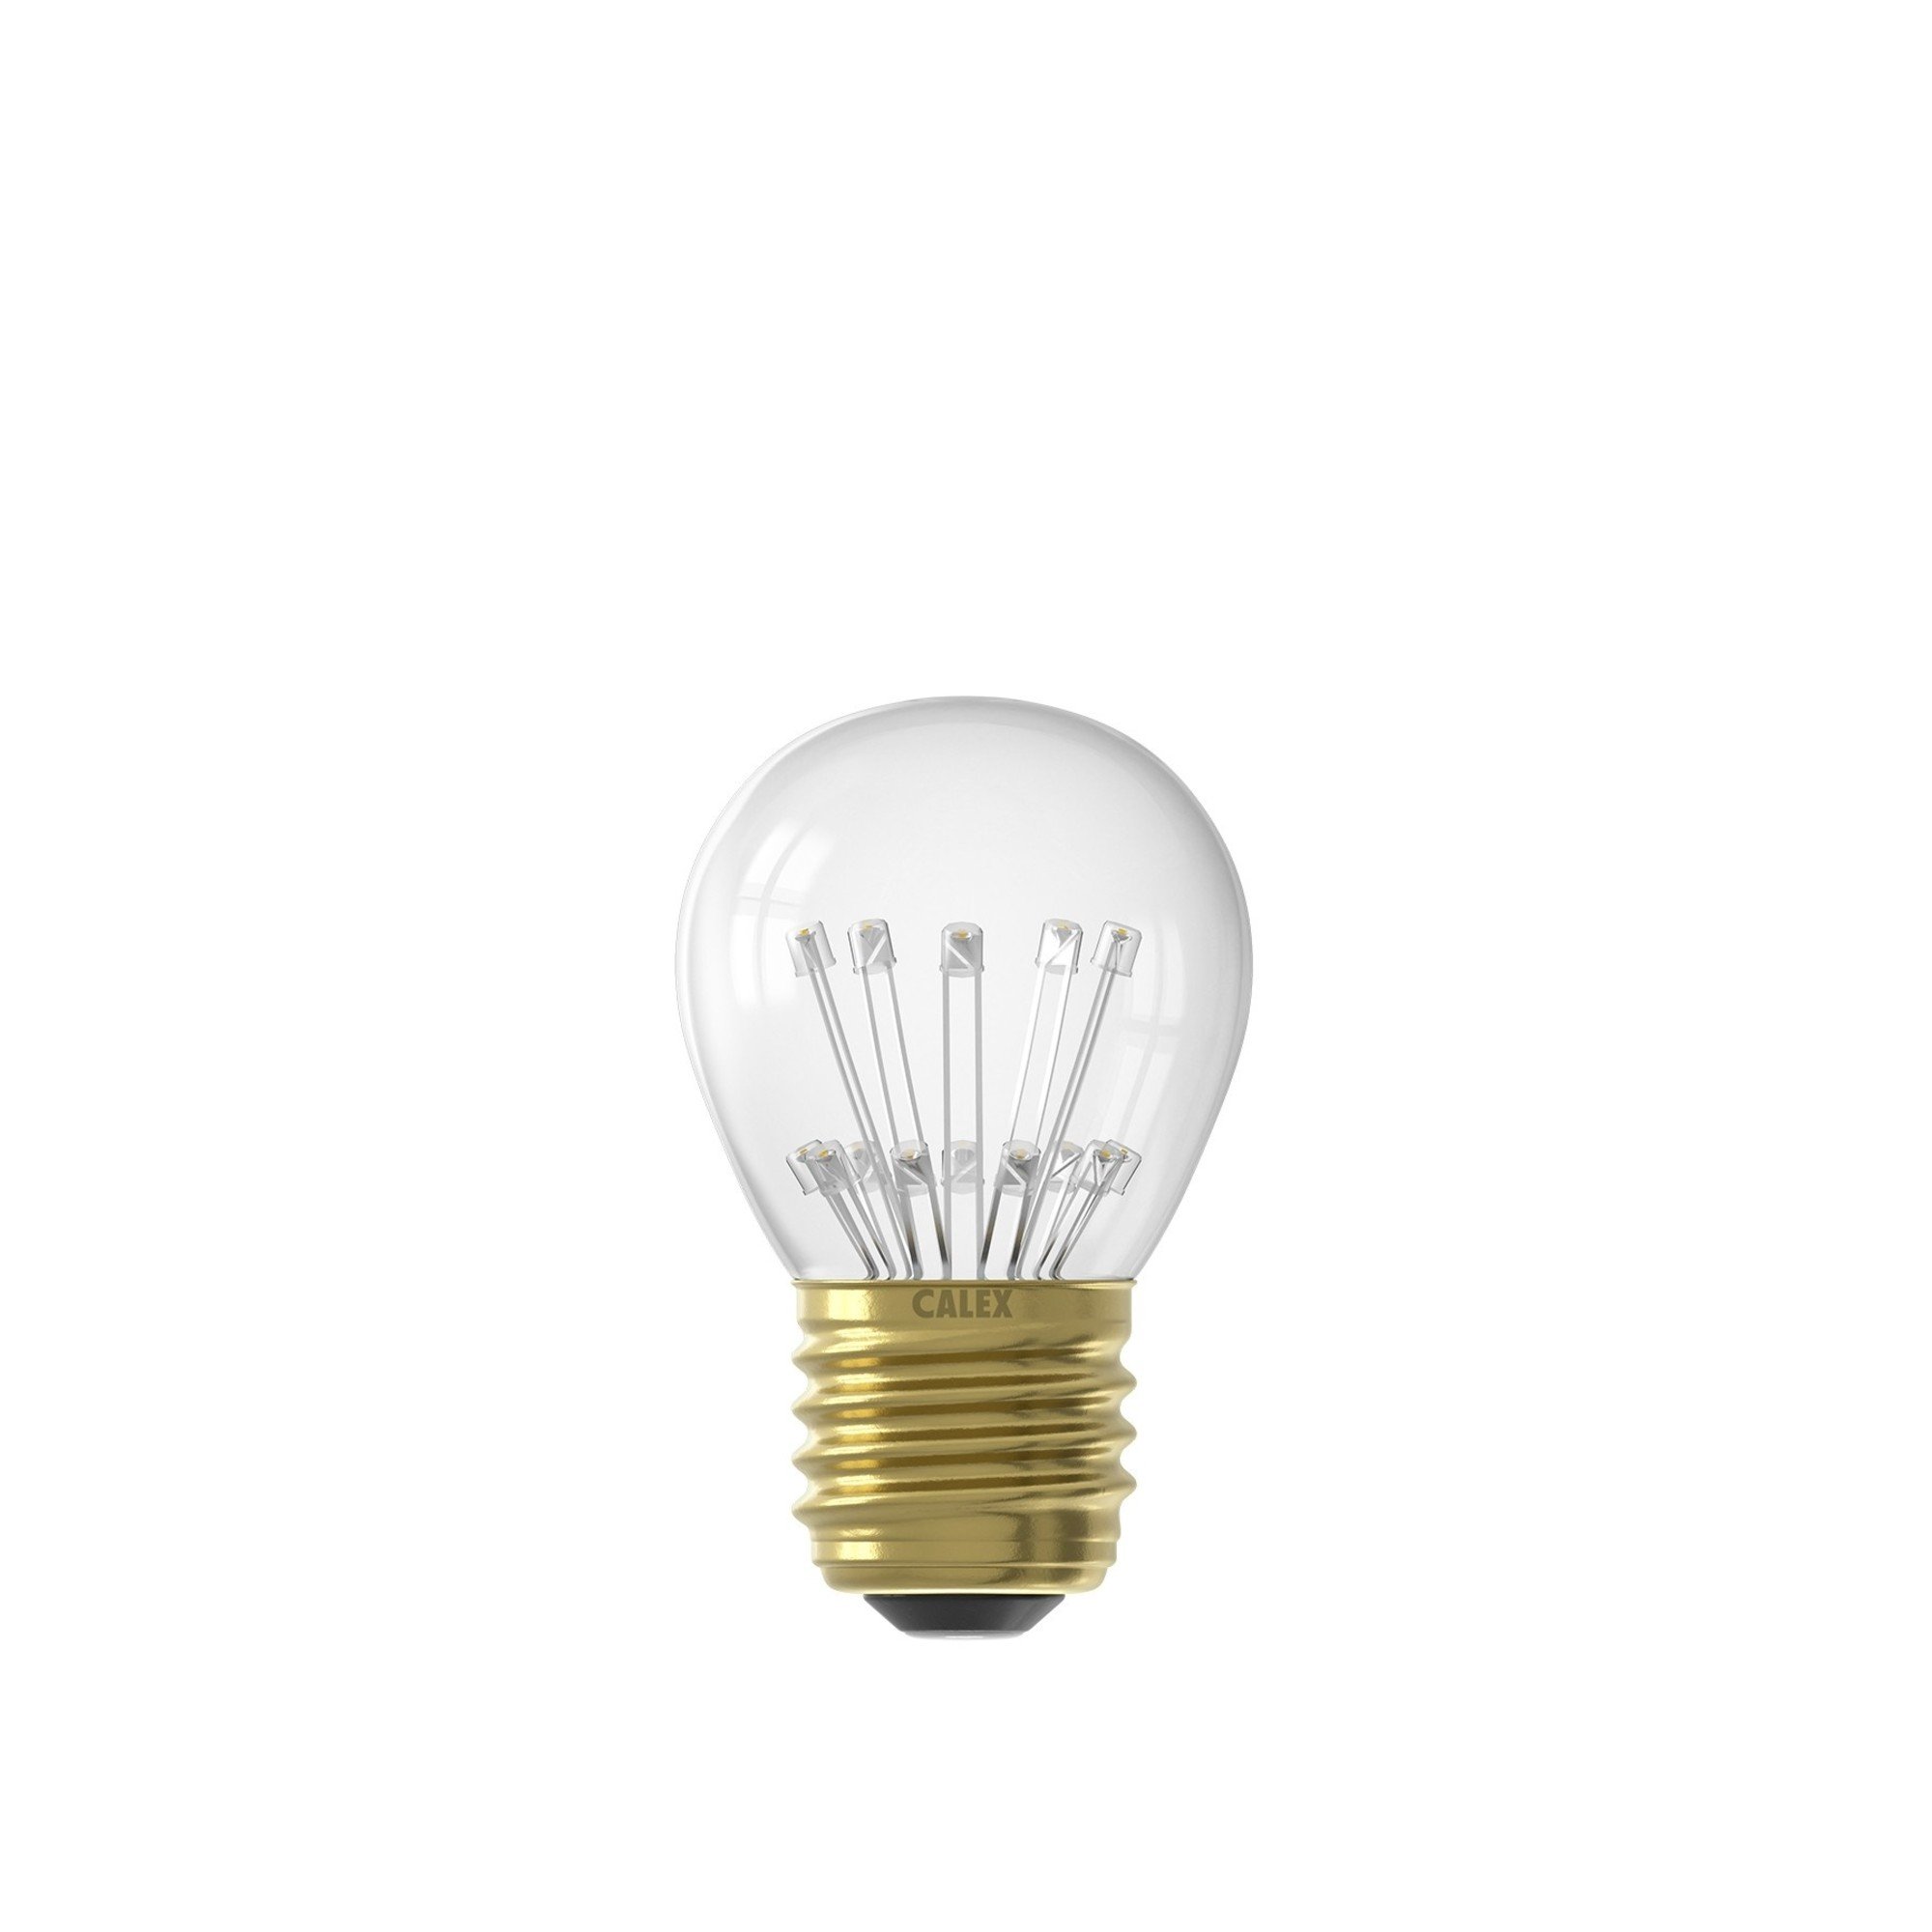 Onmogelijk de begeleiding Voorkomen Calex Pearl LED Lamp - E27 - 55 Lumen - Lightexpert.nl